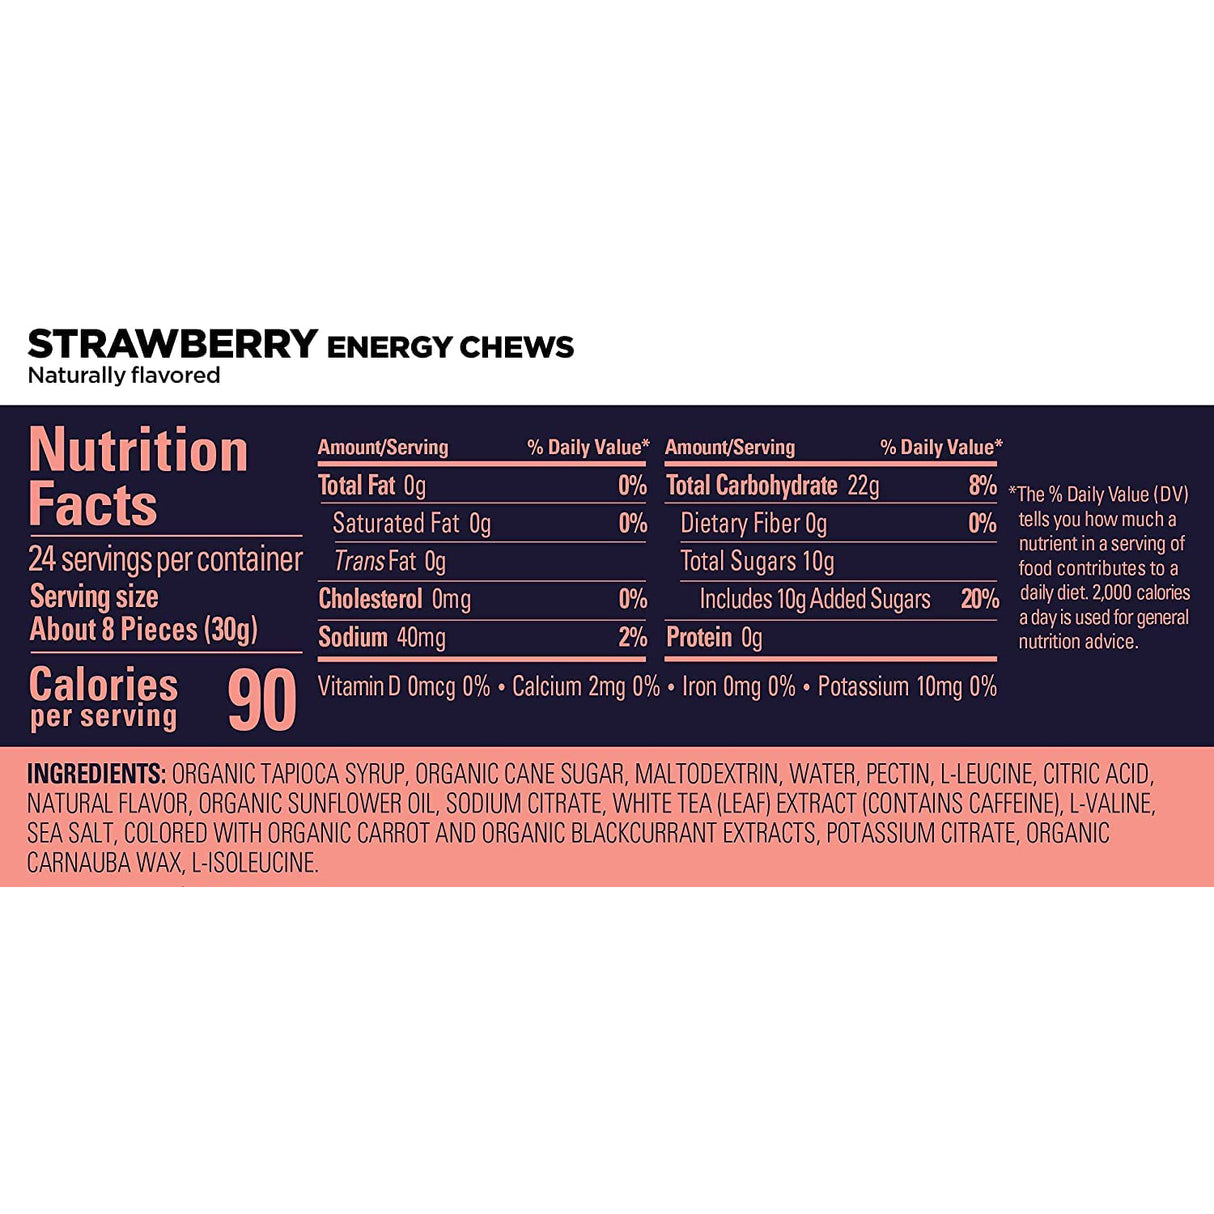 GU Energy Chews - Strawberry (12 x 60g)